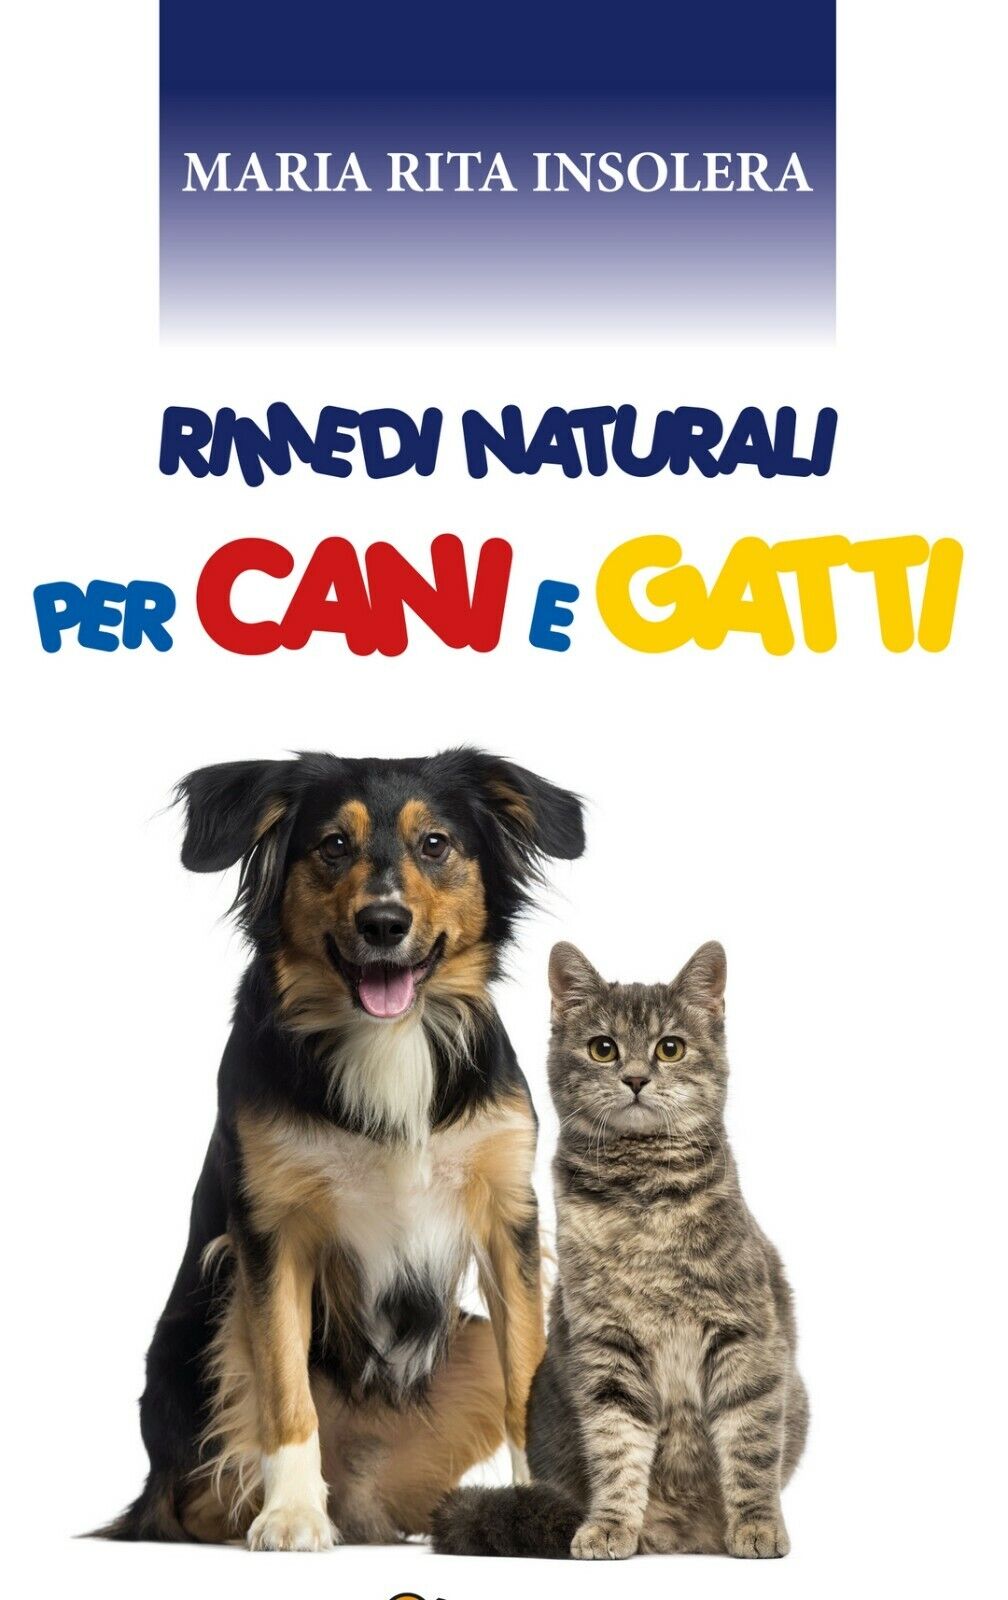 Rimedi naturali per Cani e Gatti  di Maria Rita Insolera,  2020,  Youcanprint